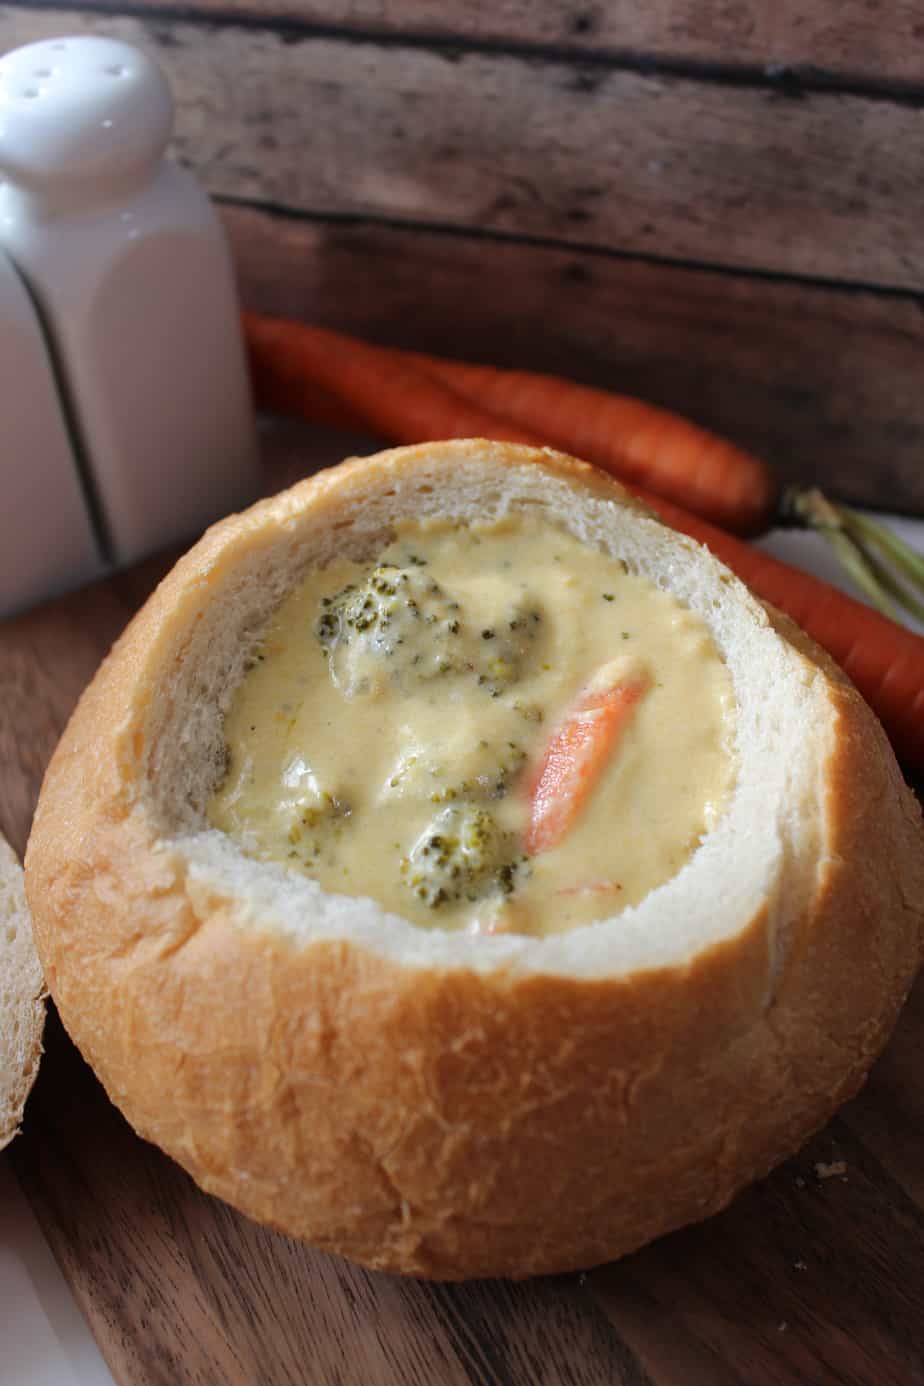 Copycat Panera Broccoli Cheese Soup Recipe